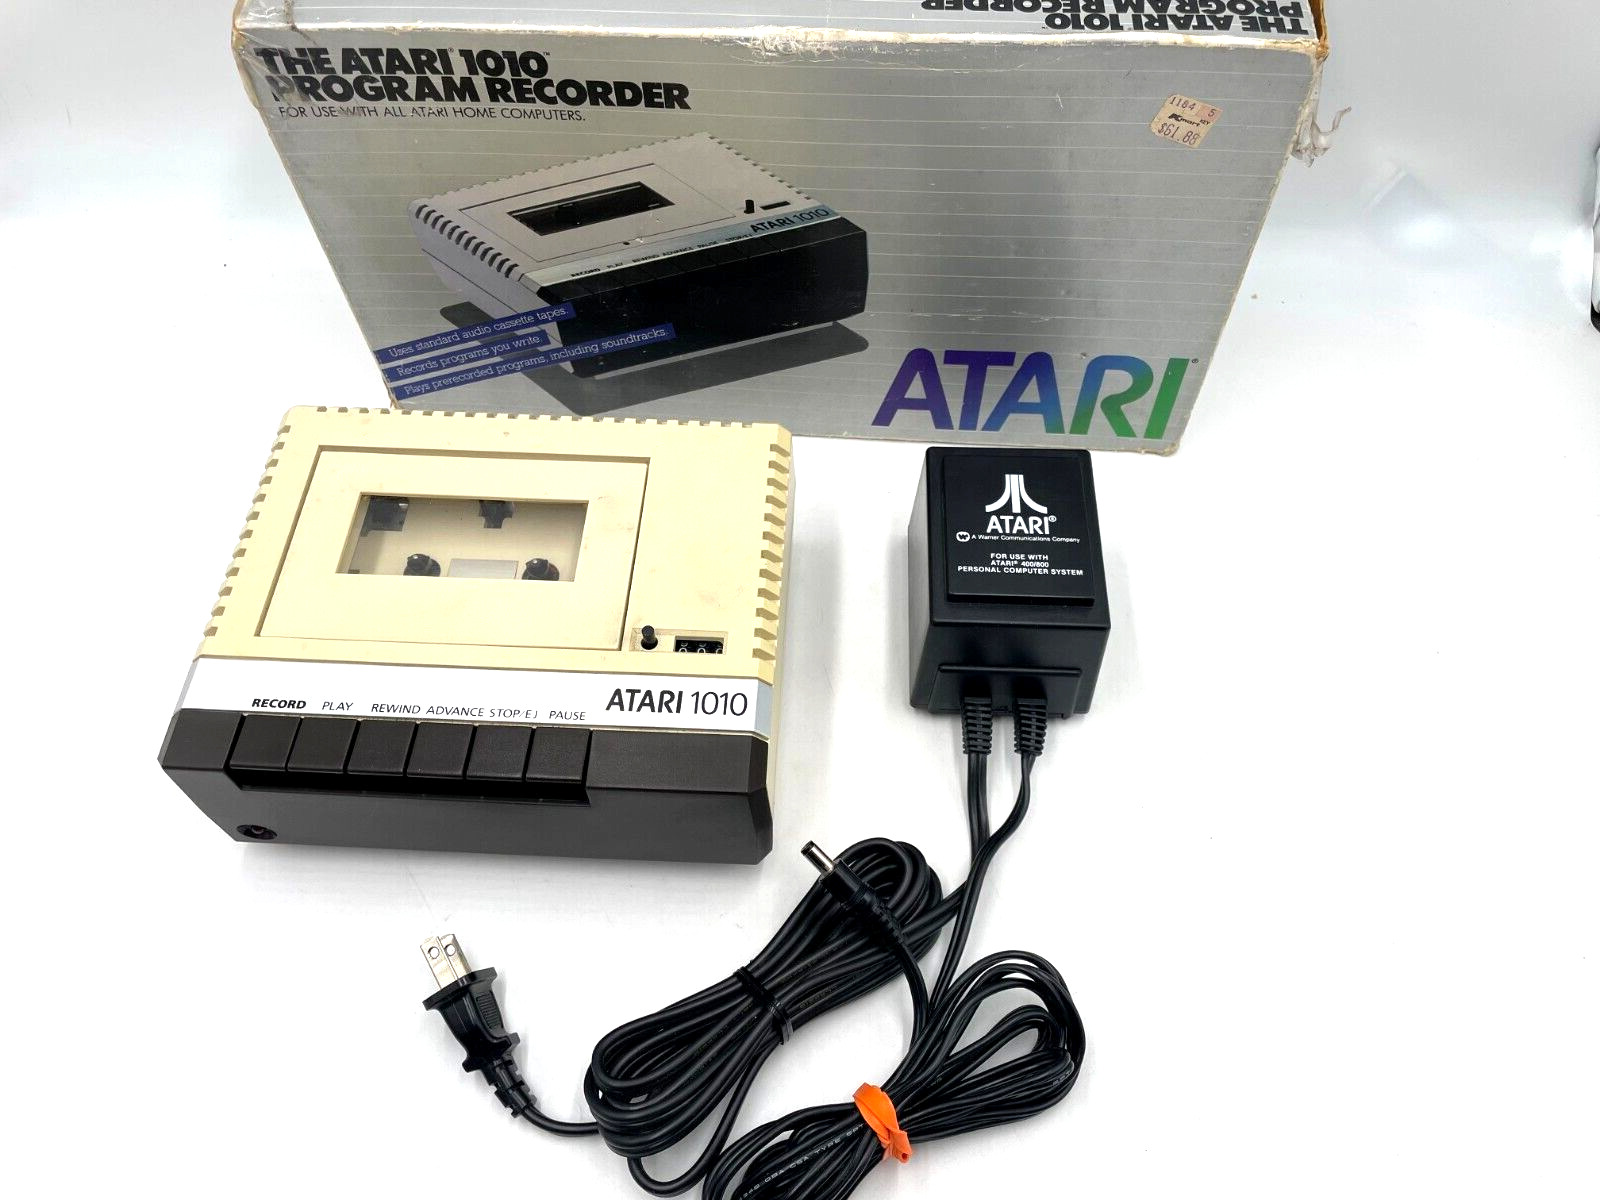 Parts/Repair Only — Atari 1010 Program Recorder — Complete In Box